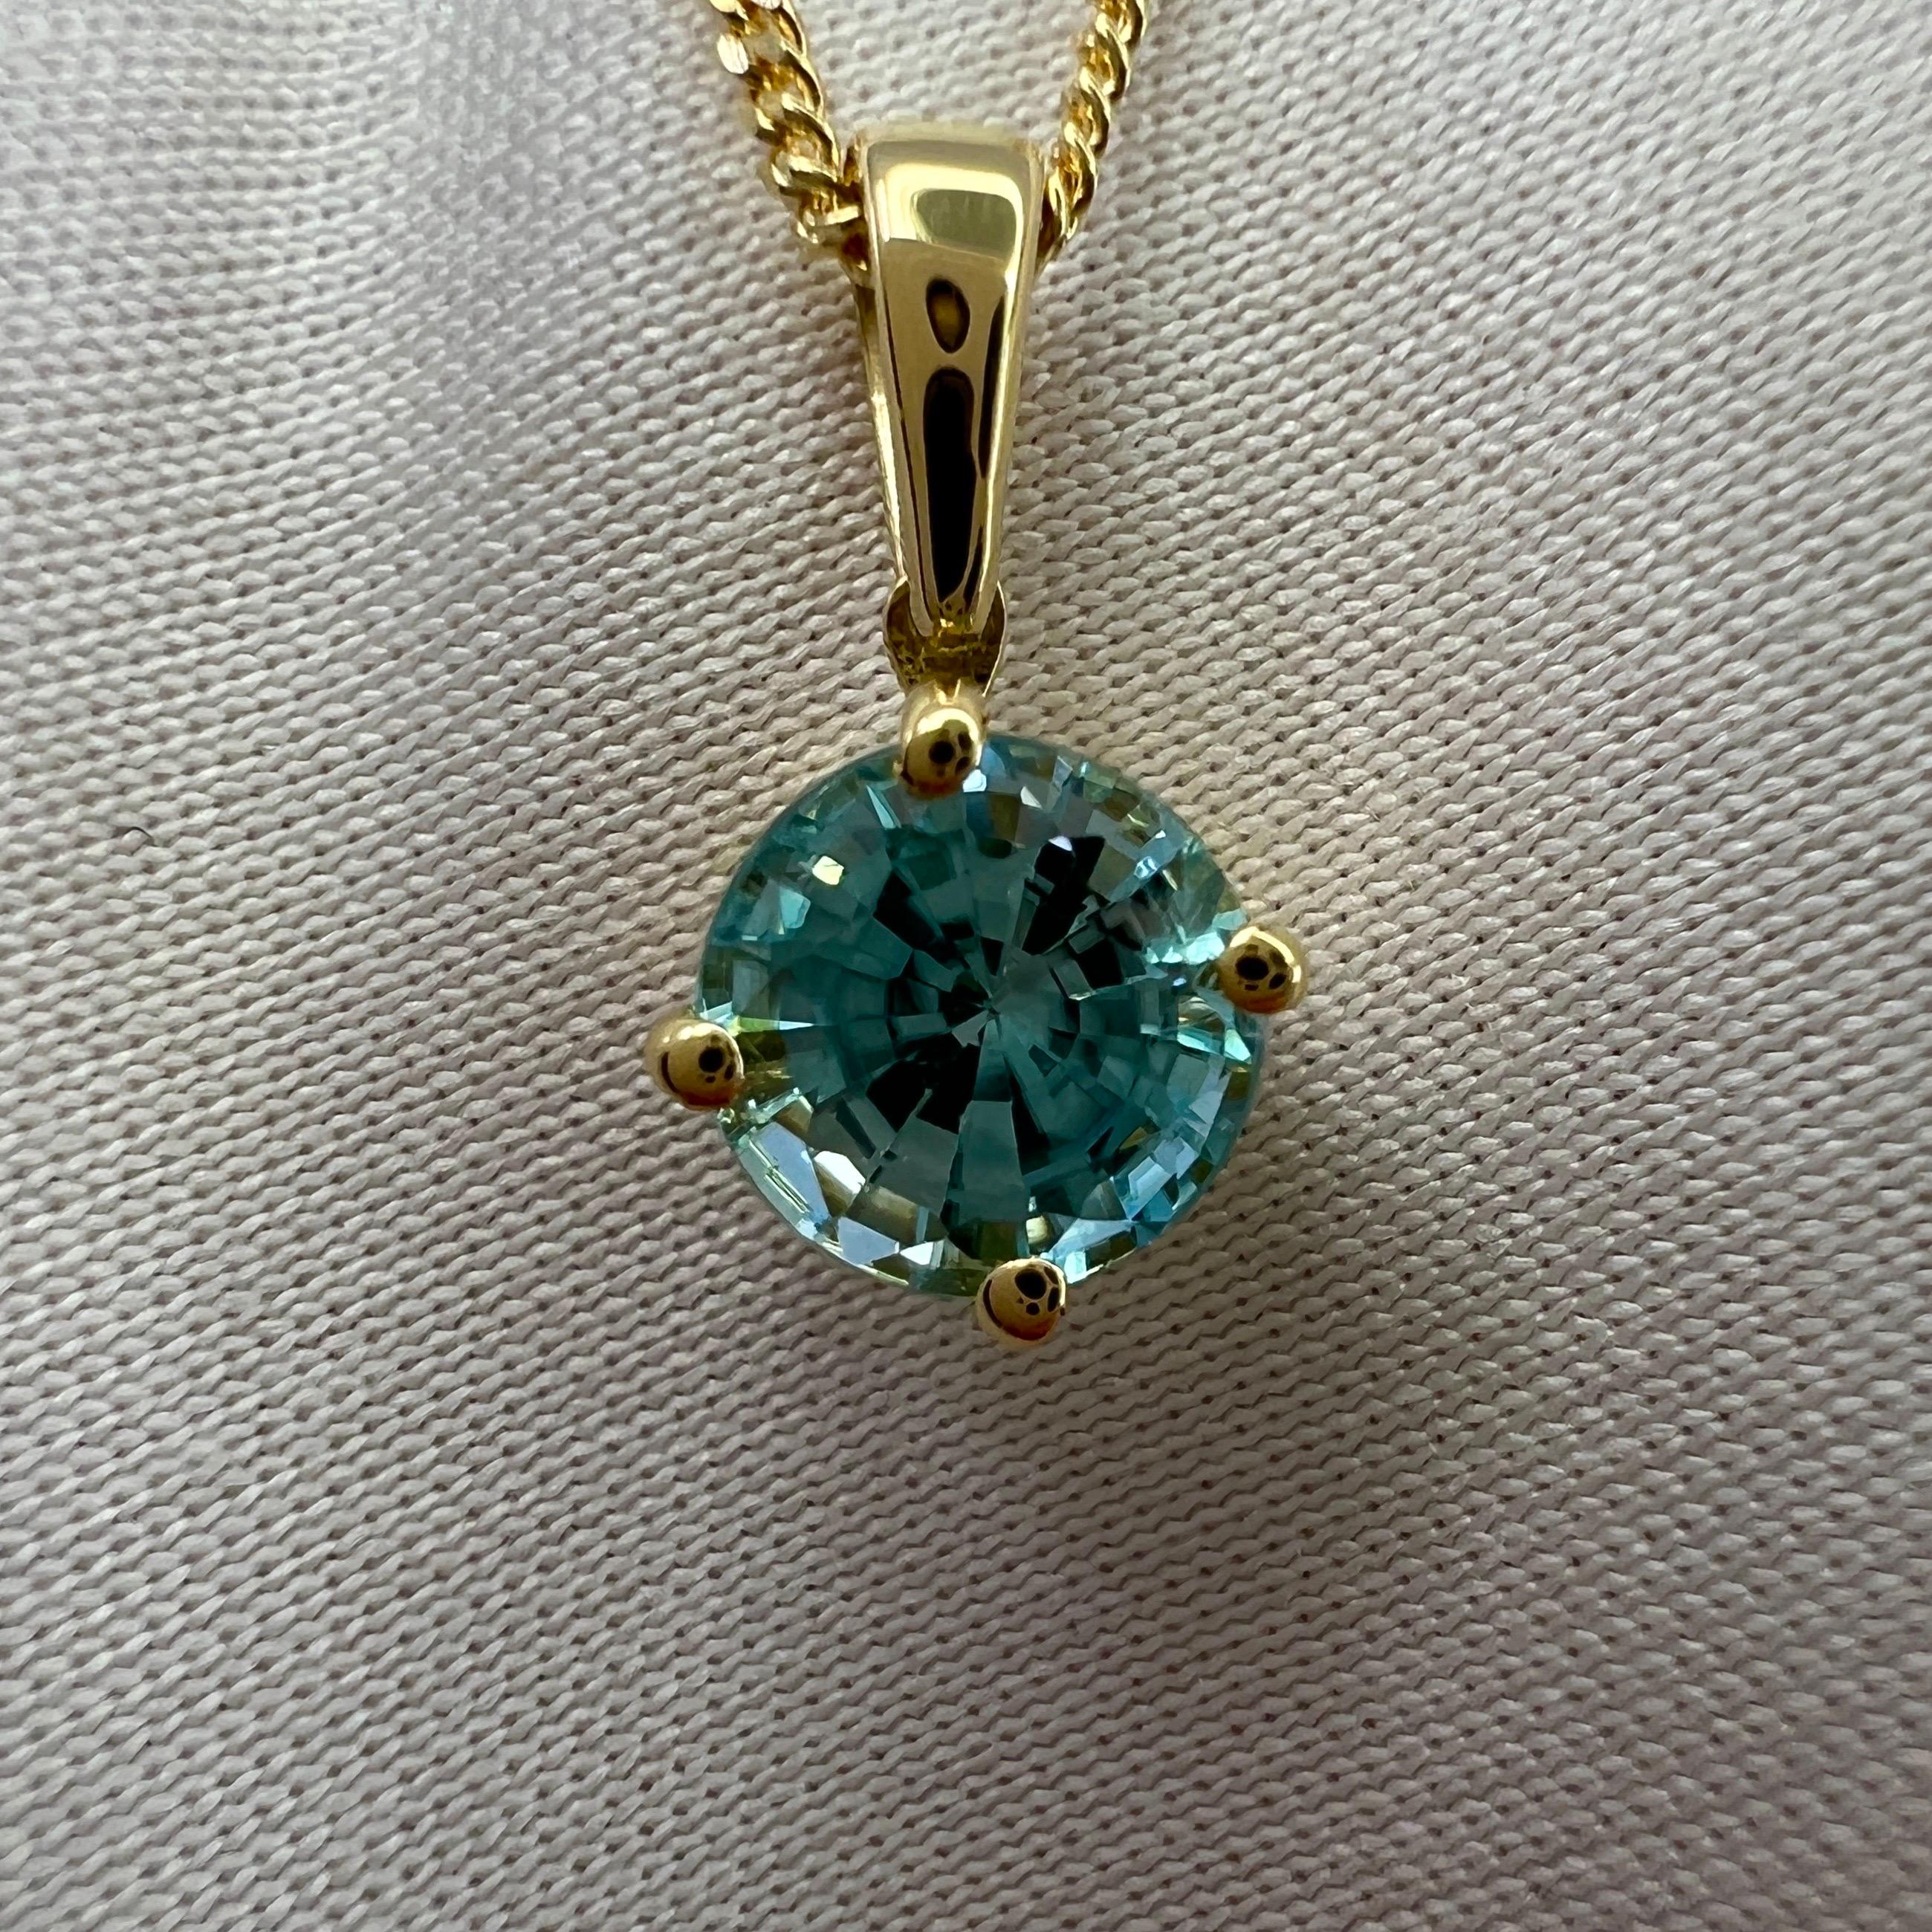 Vivid Neon Blue Zircon 1.20 Carat Round Cut 18k Yellow Gold Pendant Necklace For Sale 2